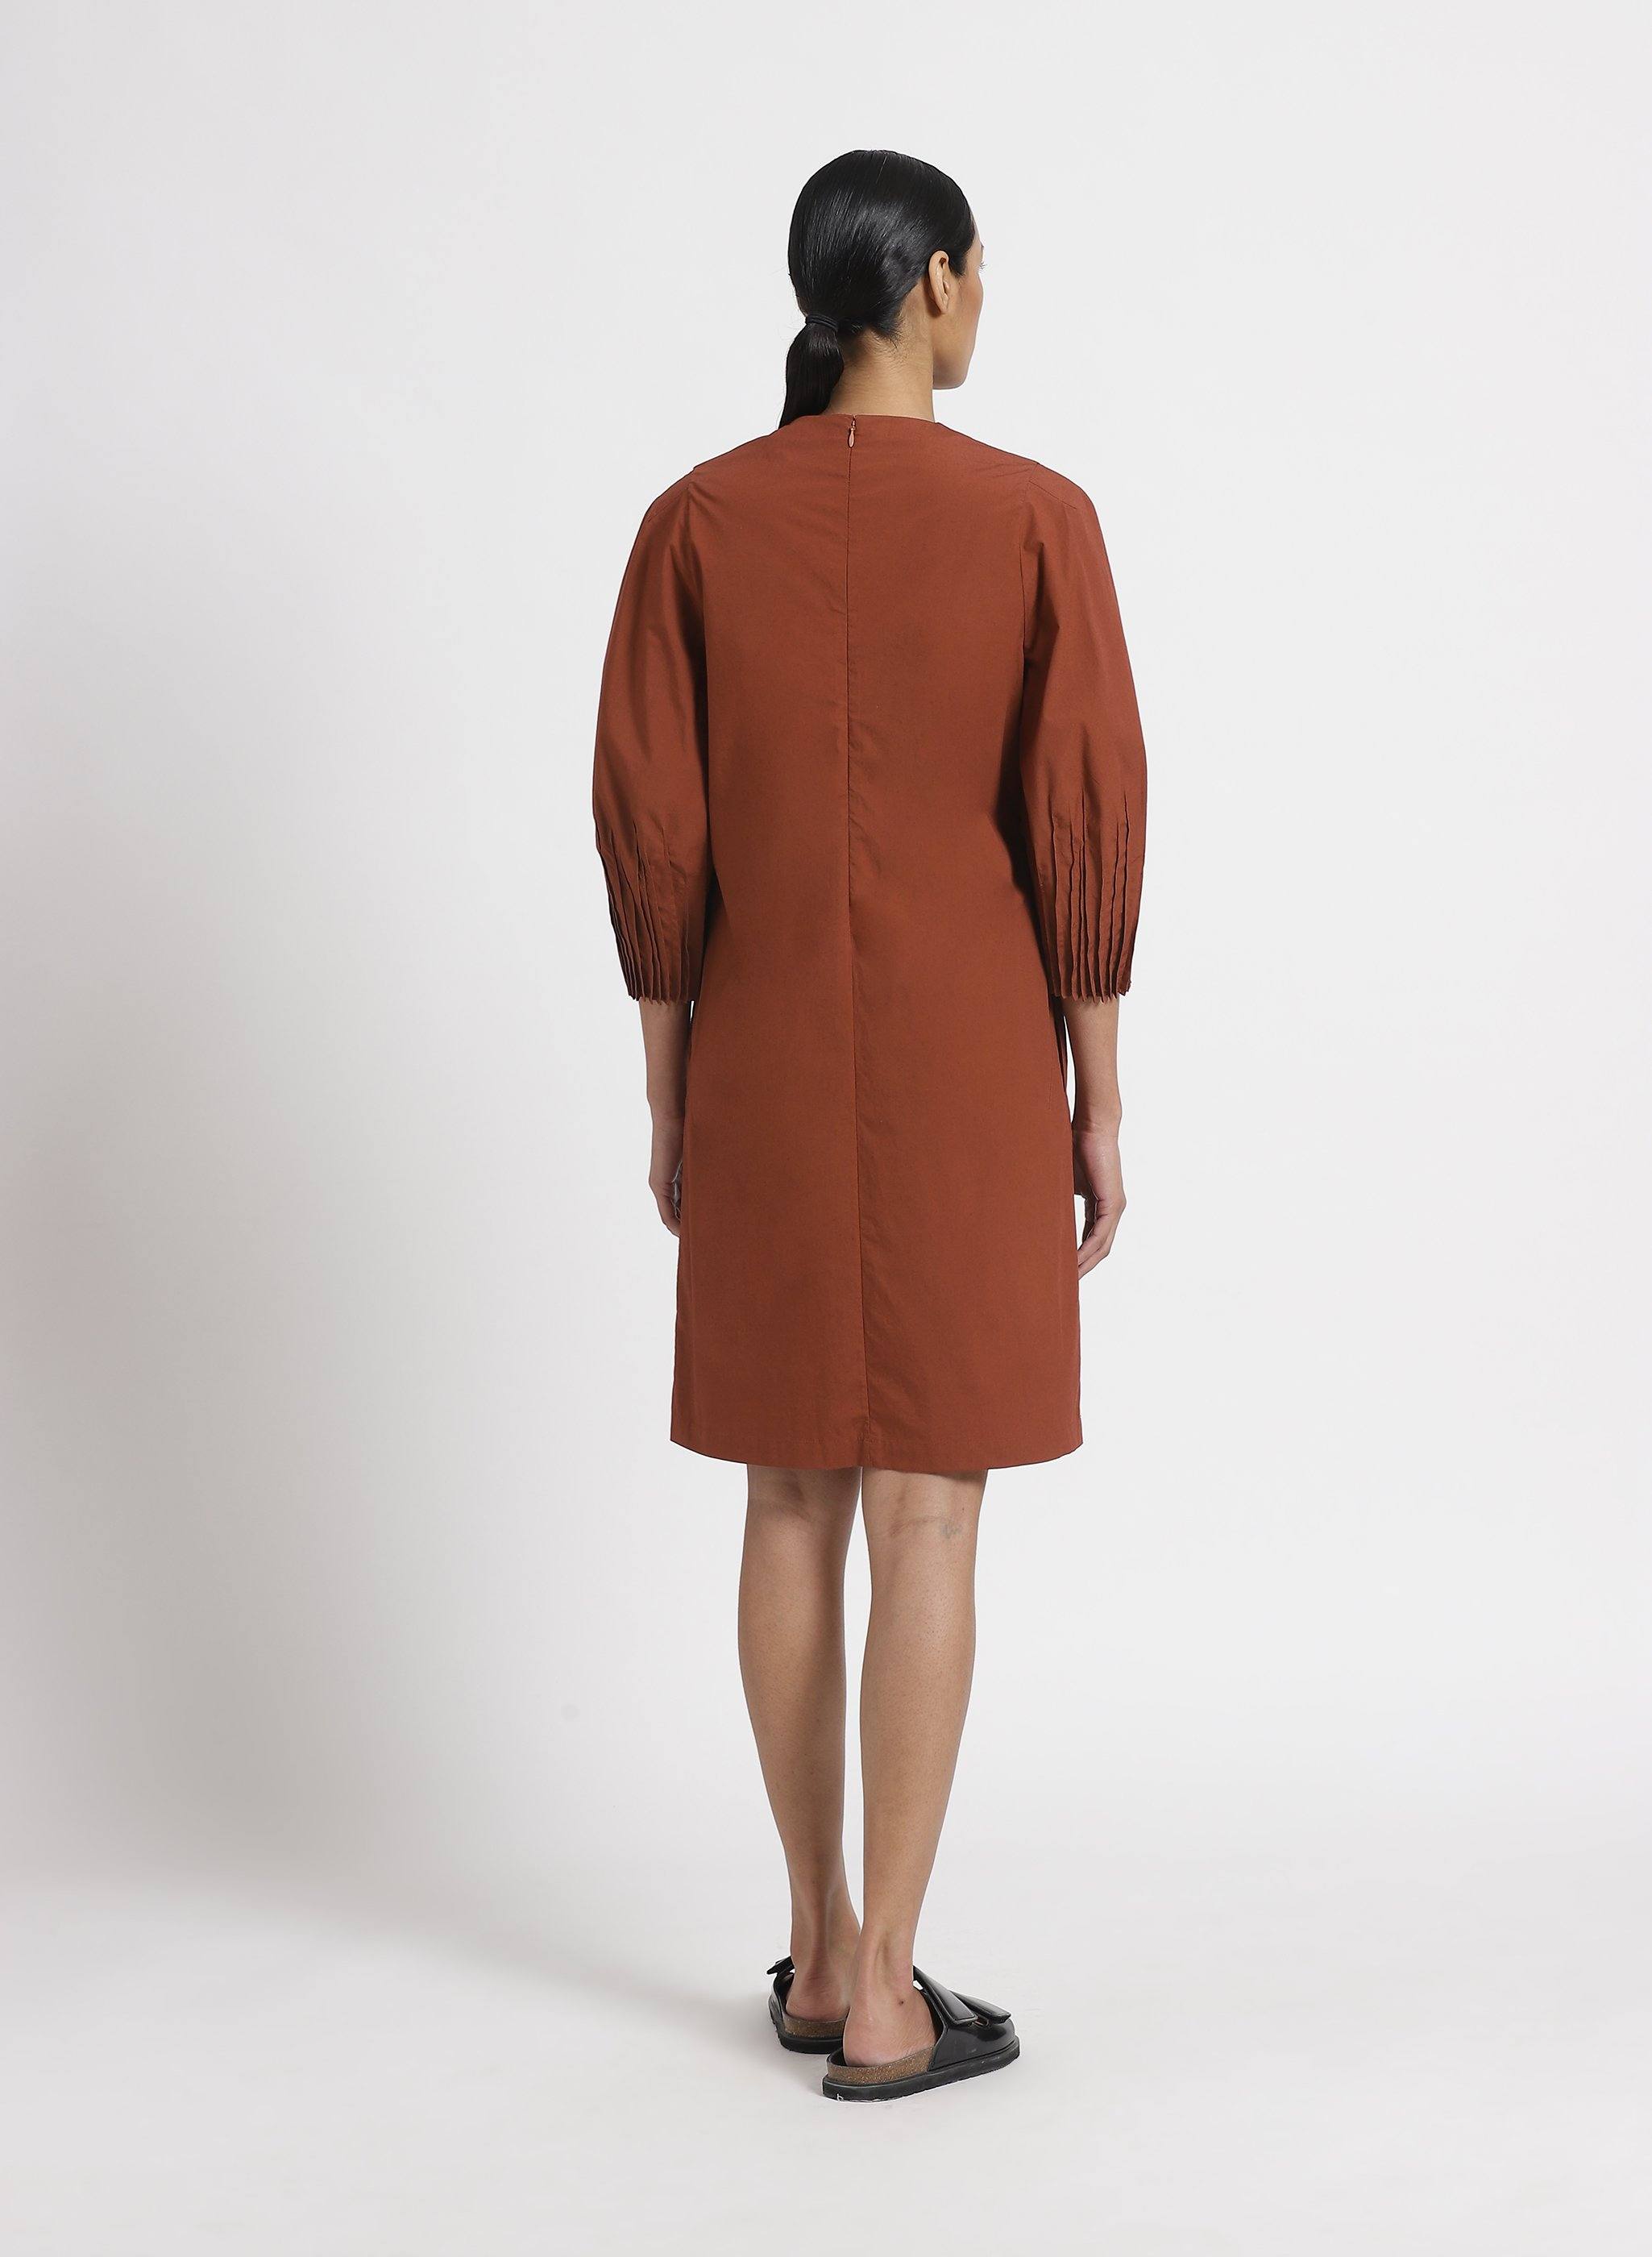 Mellea Dress- Genes online store 2020